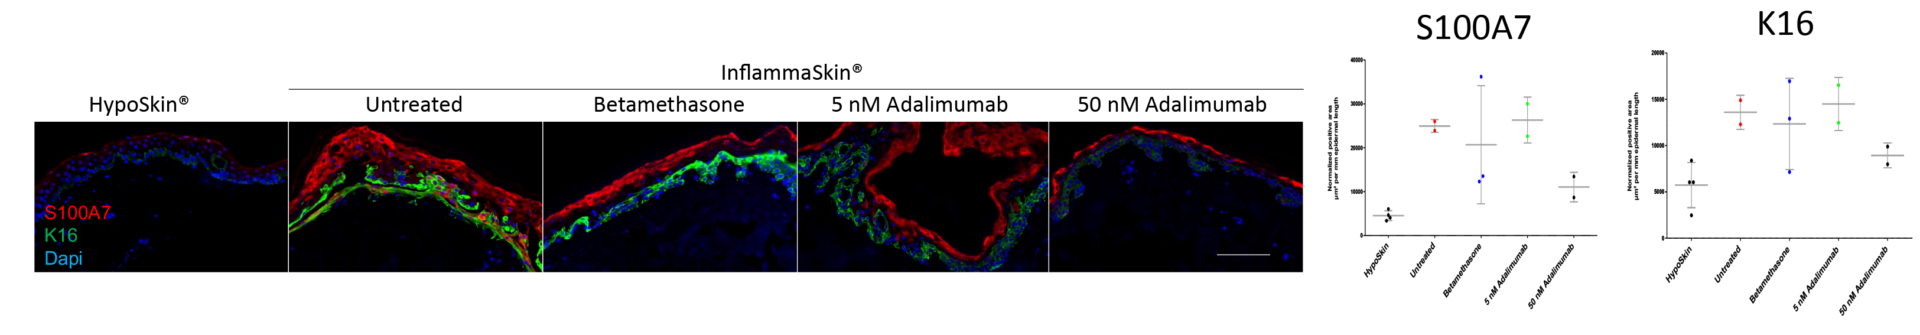 Anti-100A7/K16 double immunofluorescence staining showing how InflammaSkin® reacts to adalimumab